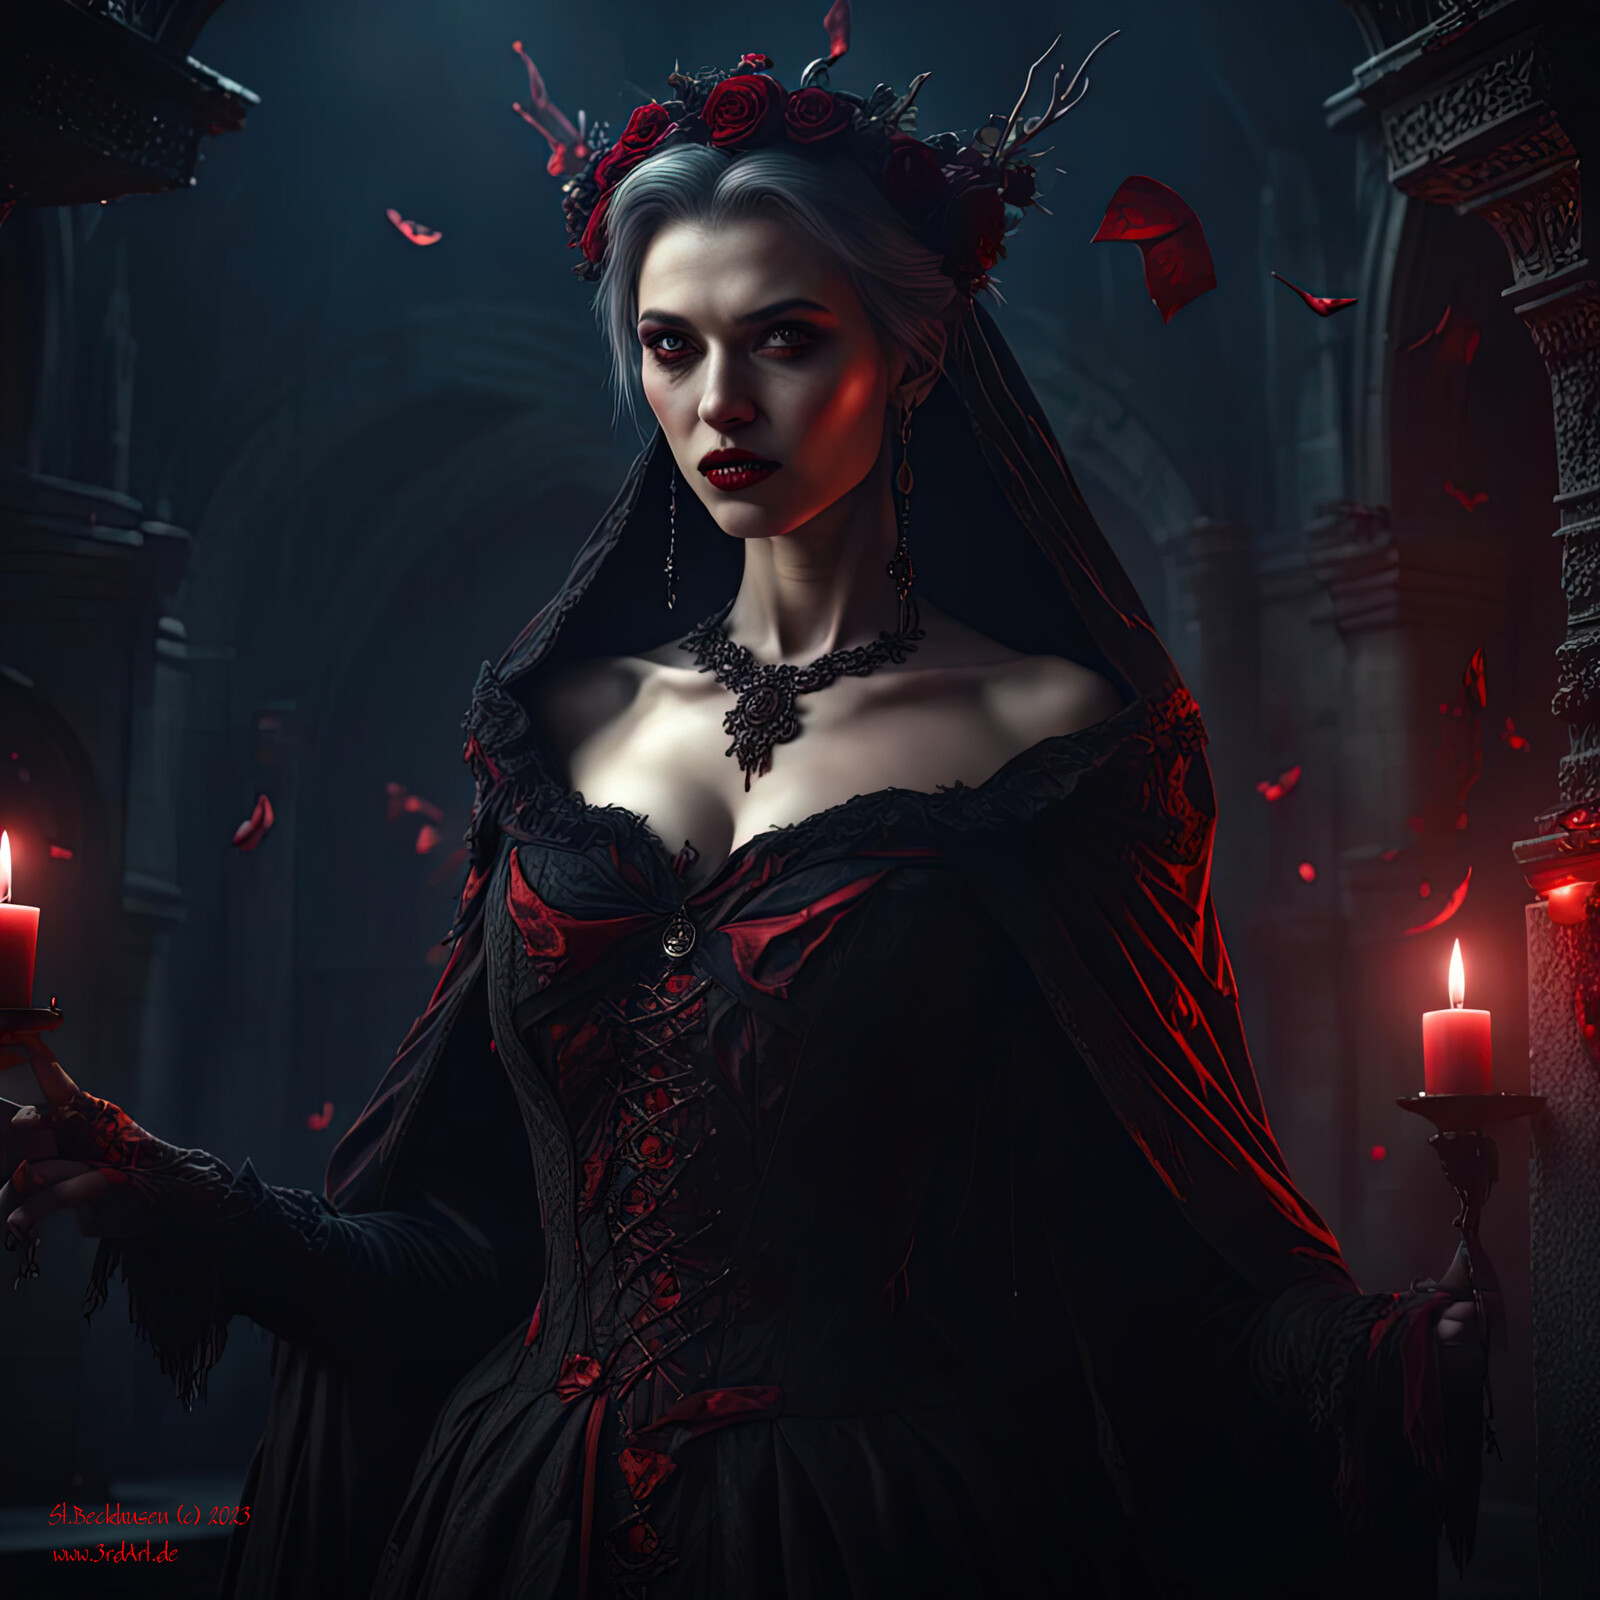 Poster-, Art-, Canvas- &amp; HD-Metal-Prints: 
https://www.artstation.com/prints/art_print/kB6Xy/the-vampire-goddess 